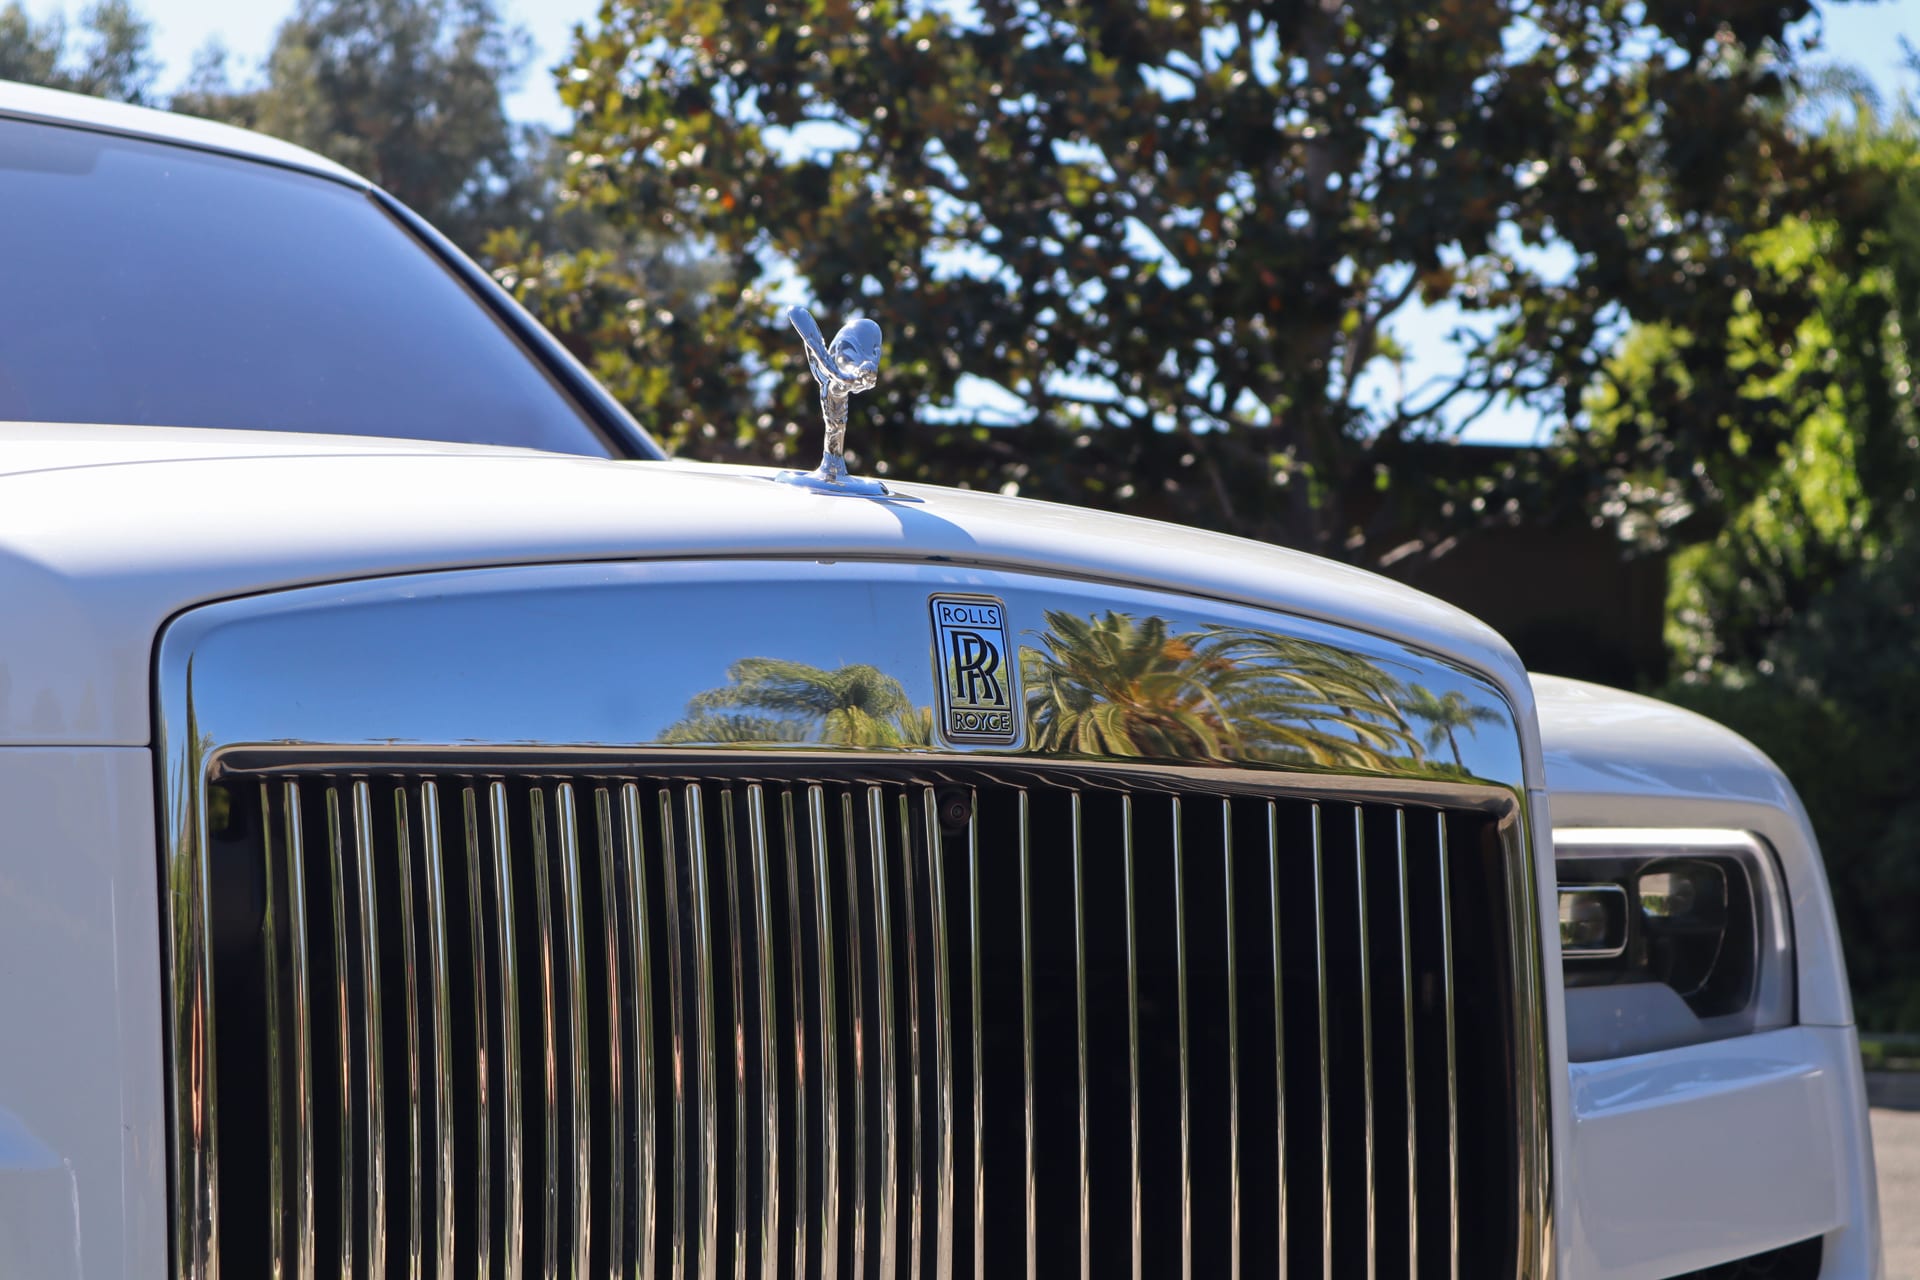 Rolls-Royce Cullinan Rental Los Angeles